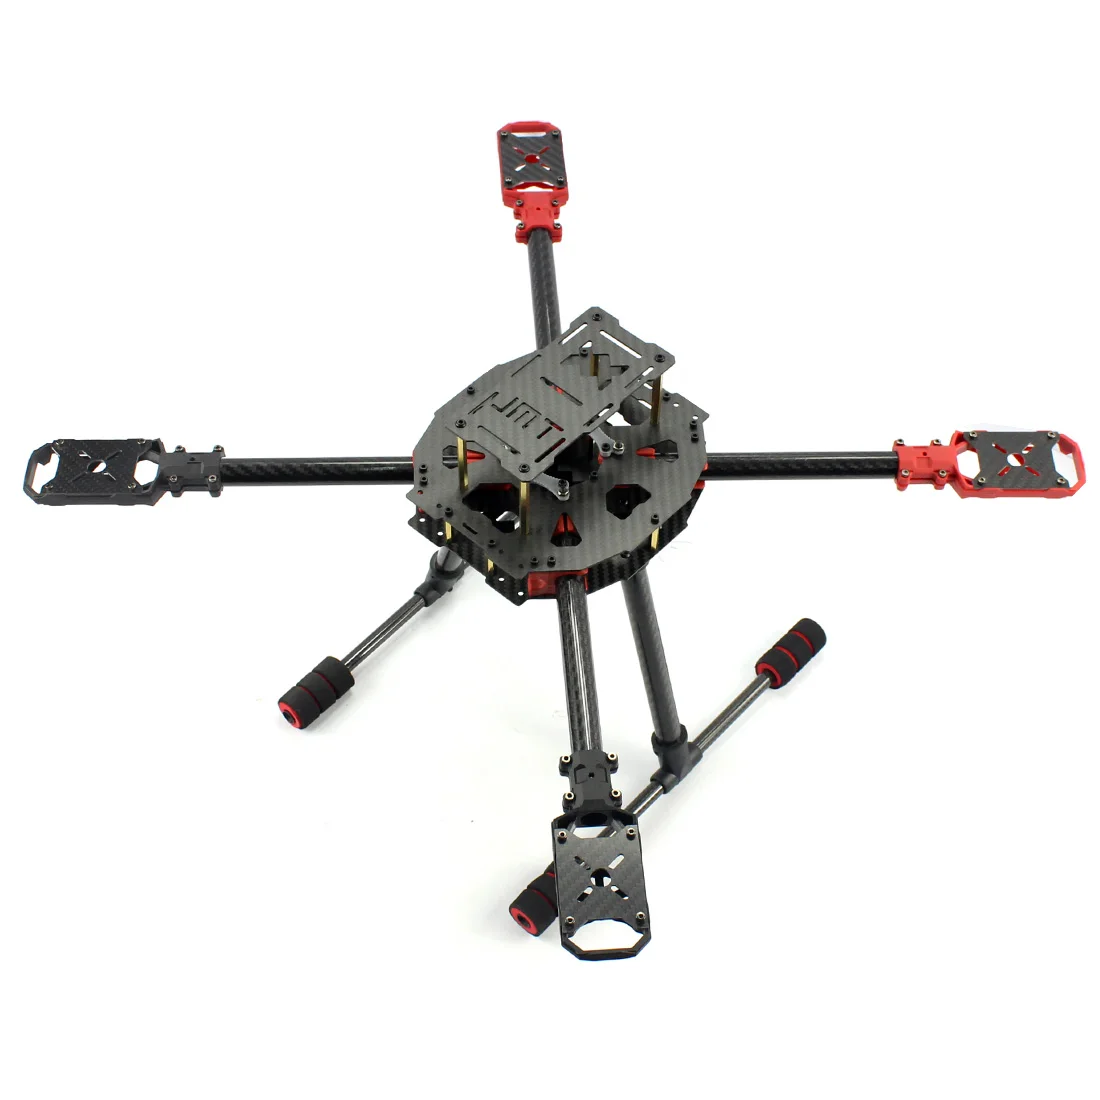 JMT J630 630mm Carbon Fiber 4-axis Foldable Rack Frame Kit  High Landing Skid for DIY Drone RC Racer Quadcopter Aircraft